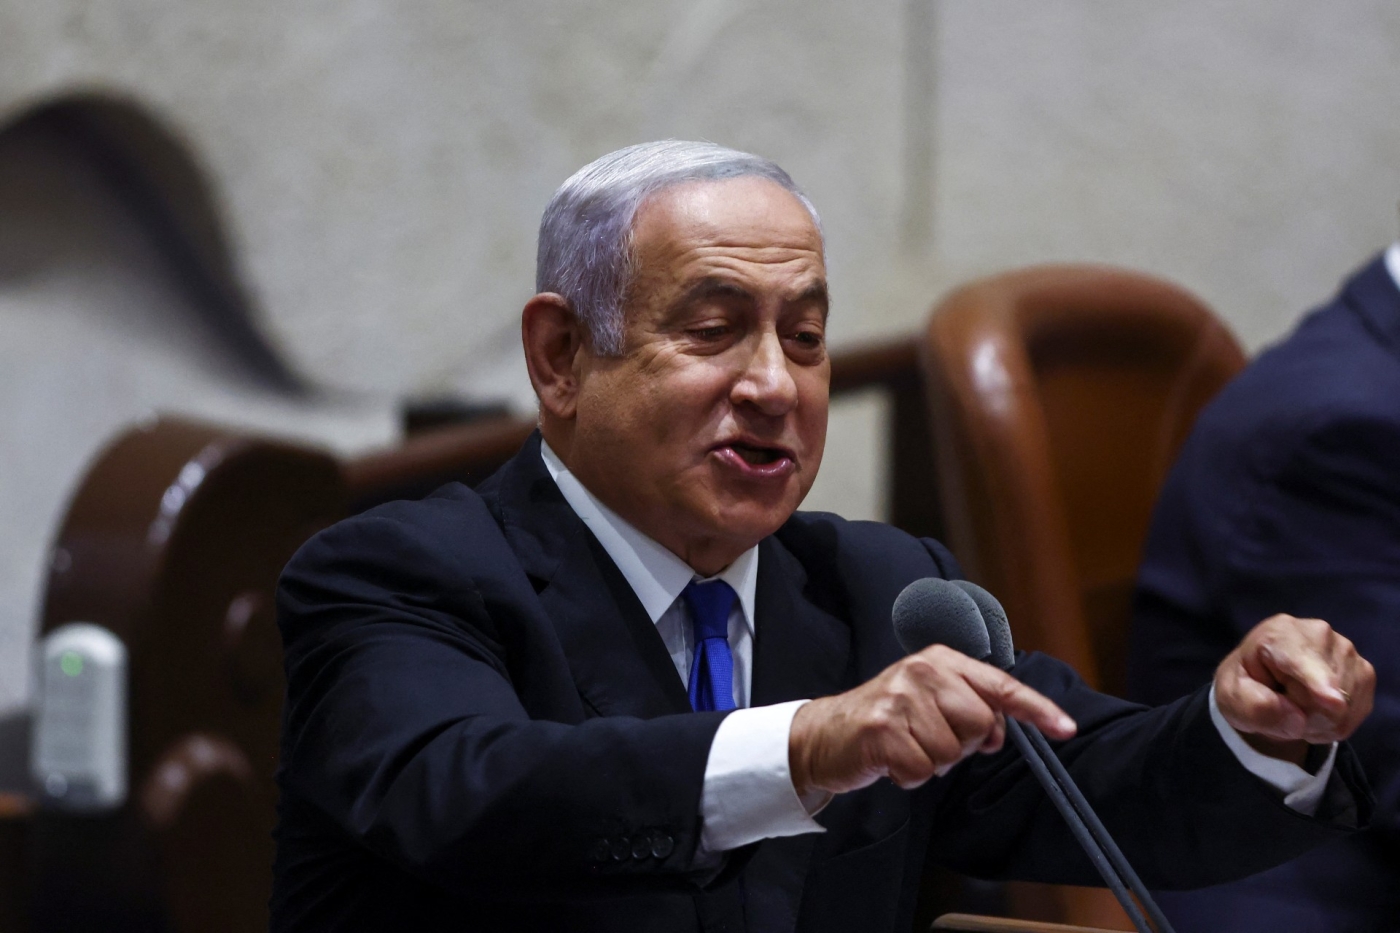 Benjamin Netanyahu speaks at the plenum at the Knesset, Israel's parliament, in Jerusalem on 30 June (Reuters)